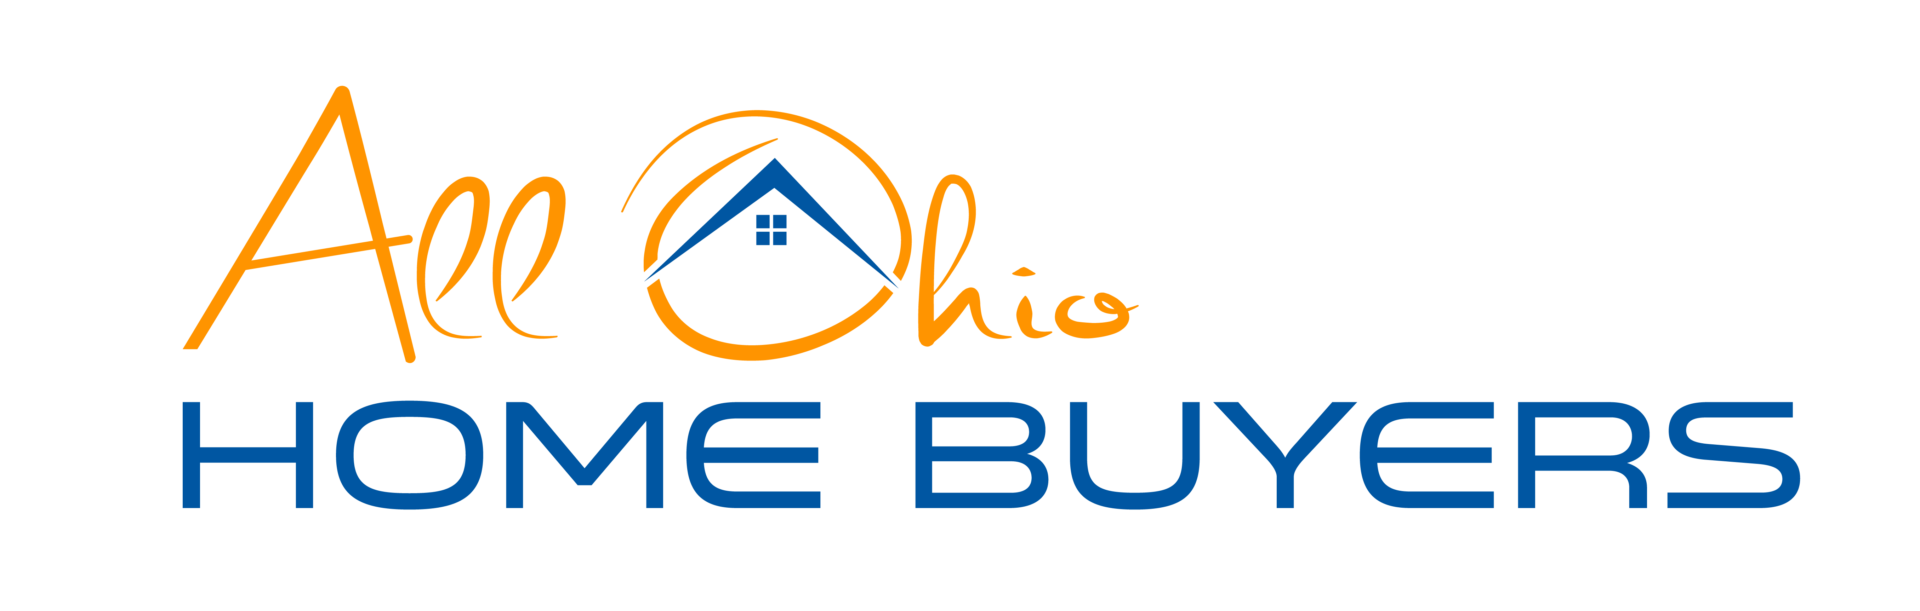 All Ohio Homebuyers logo